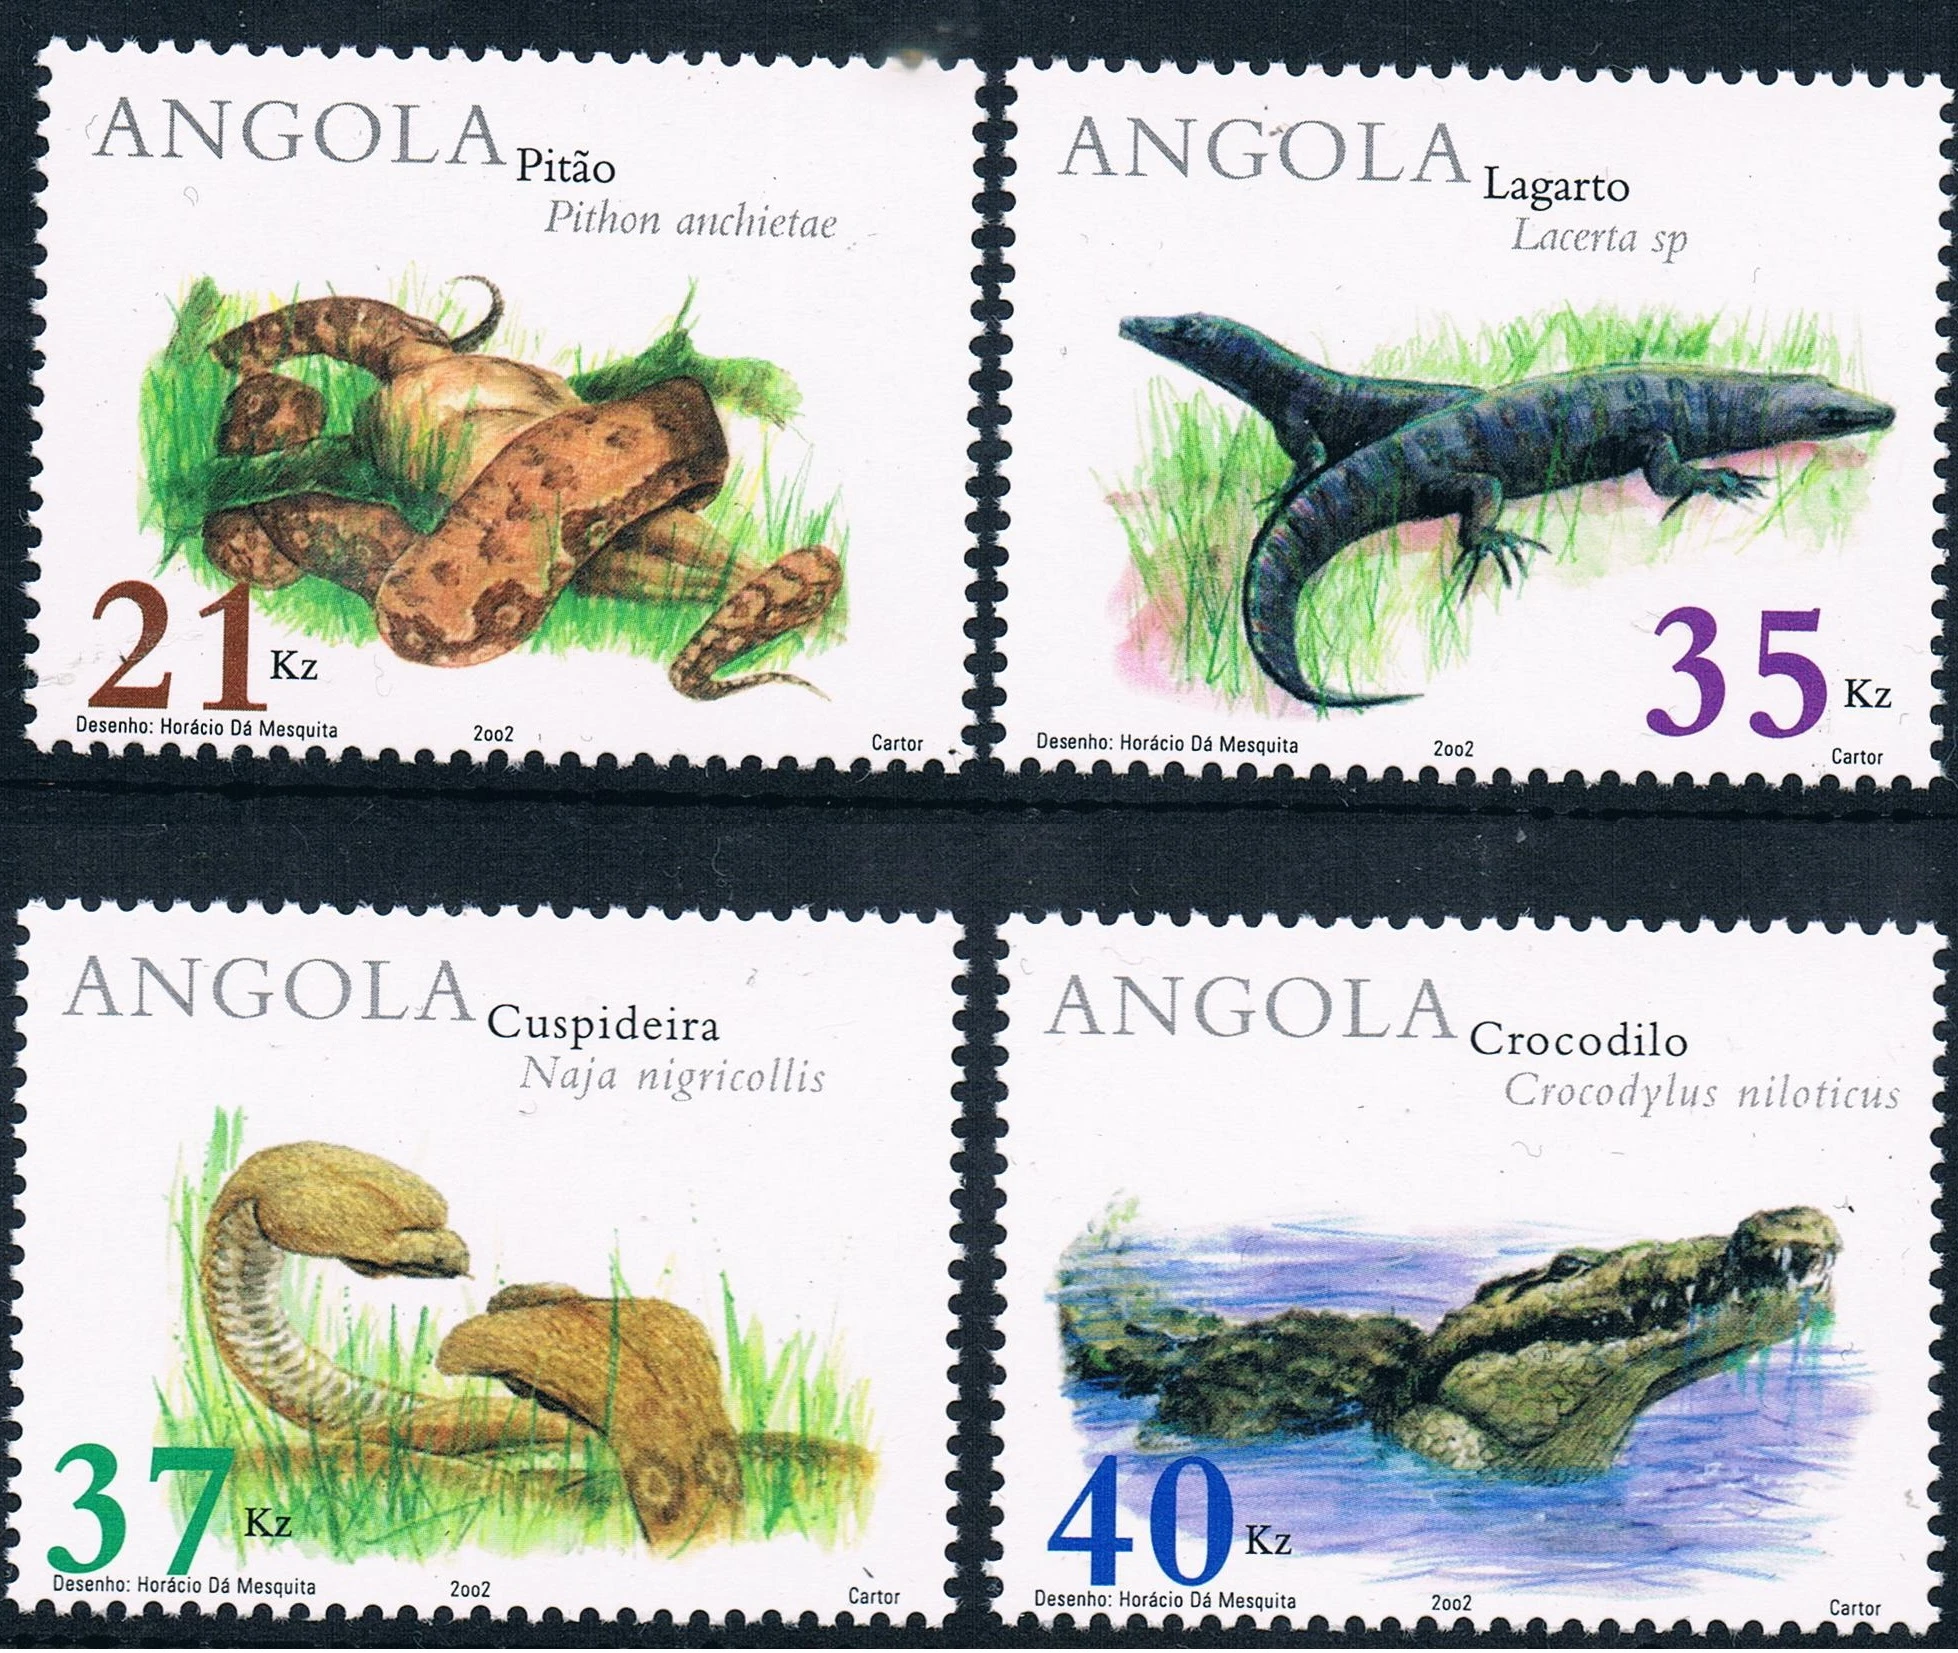 4 kom./compl. Nova Poštanska Marka Angole 2002 Puzavac Krokodil Marke MNH Slika 0